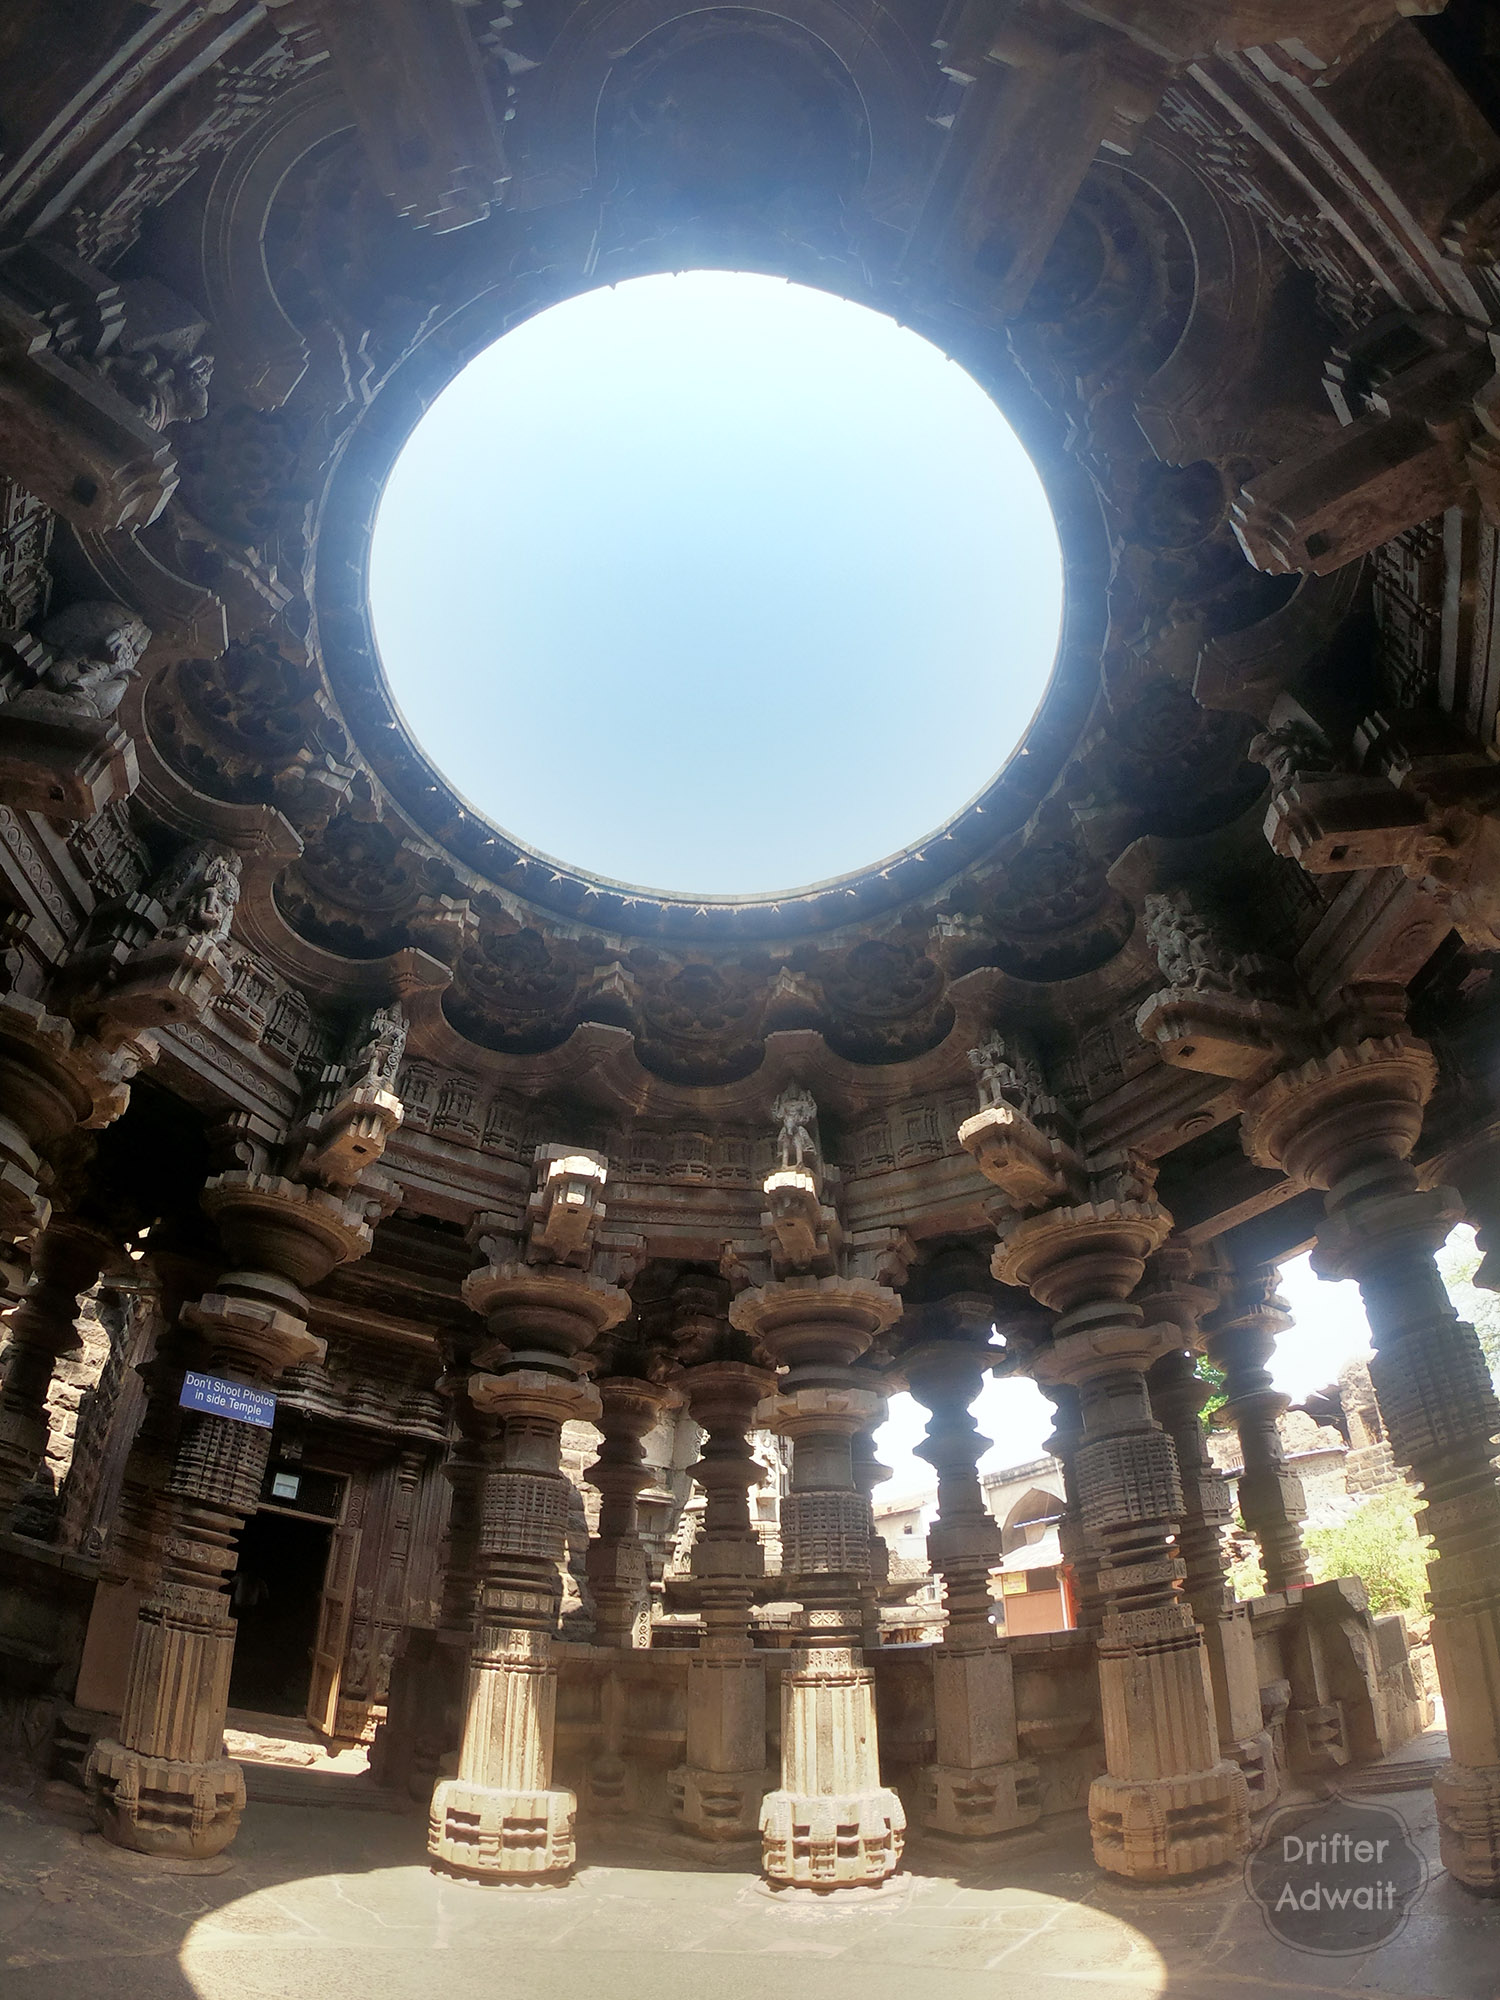 Kopeshwar Temple, Khidrapur, Maharashtra